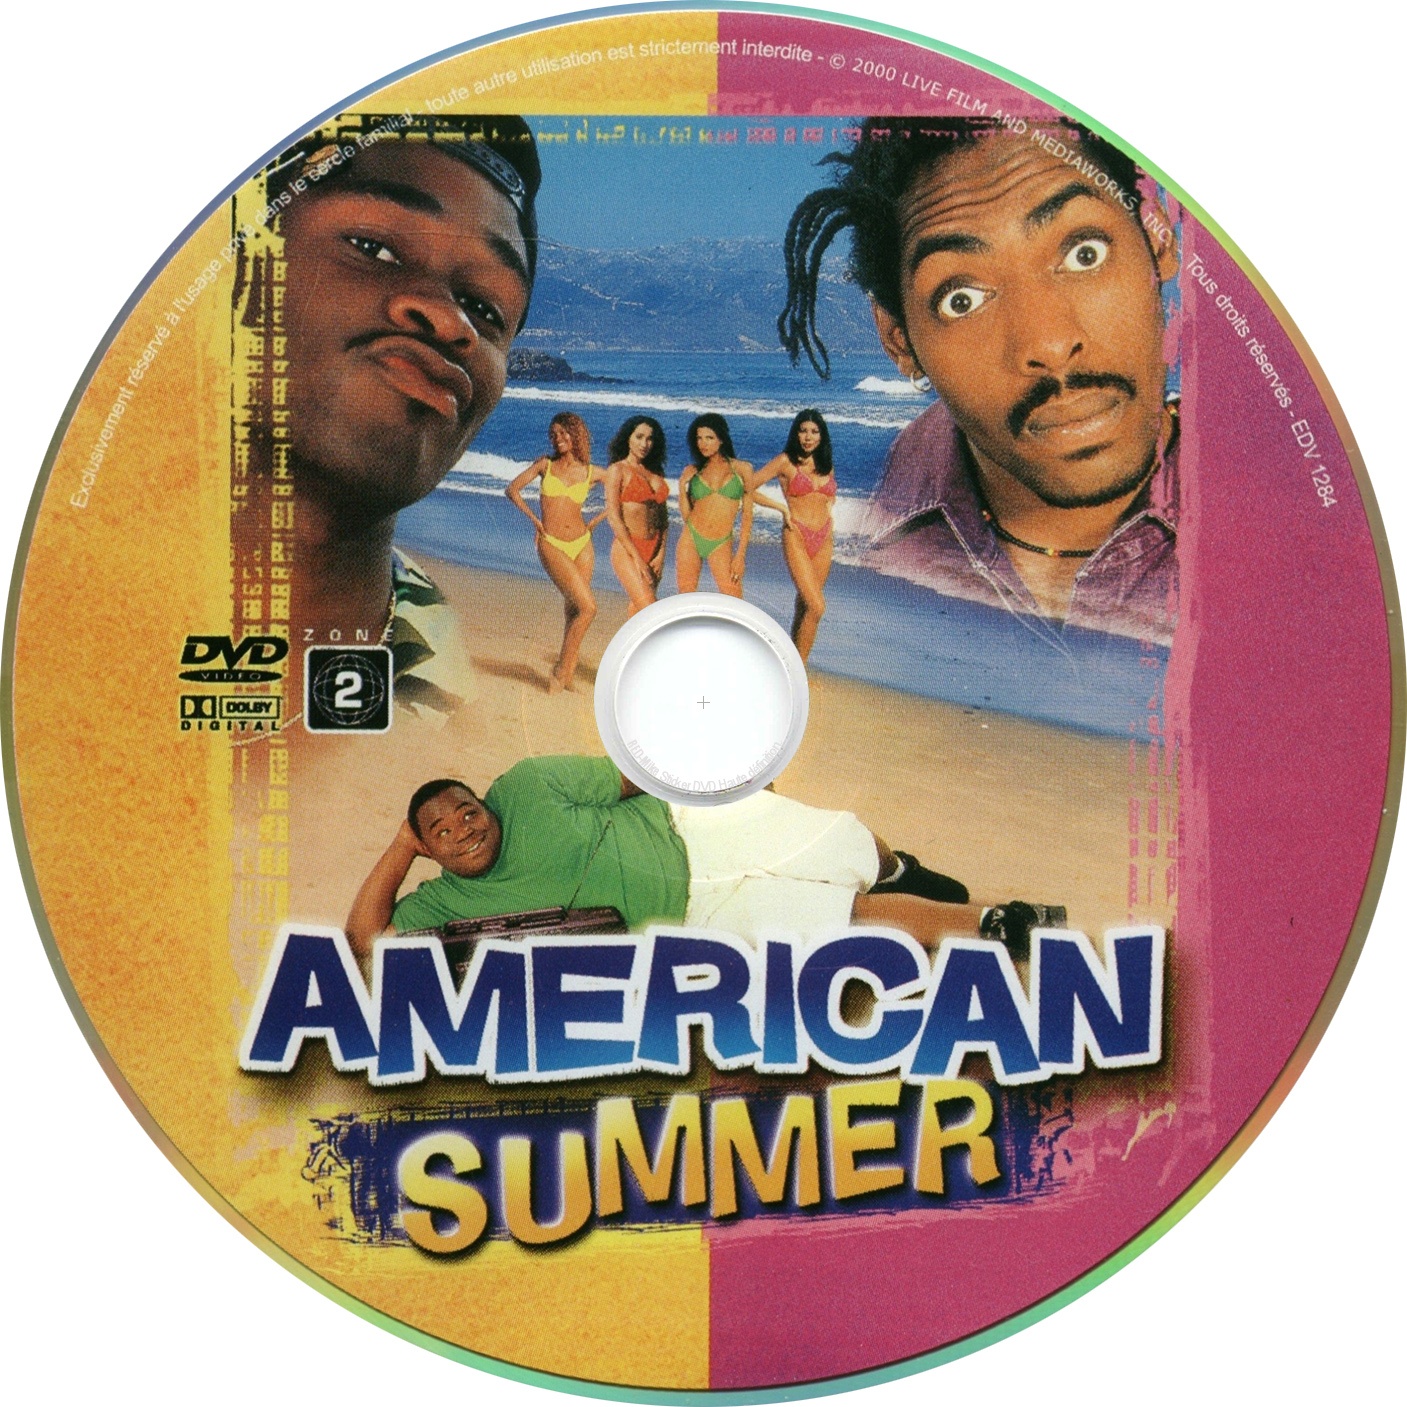 American summer